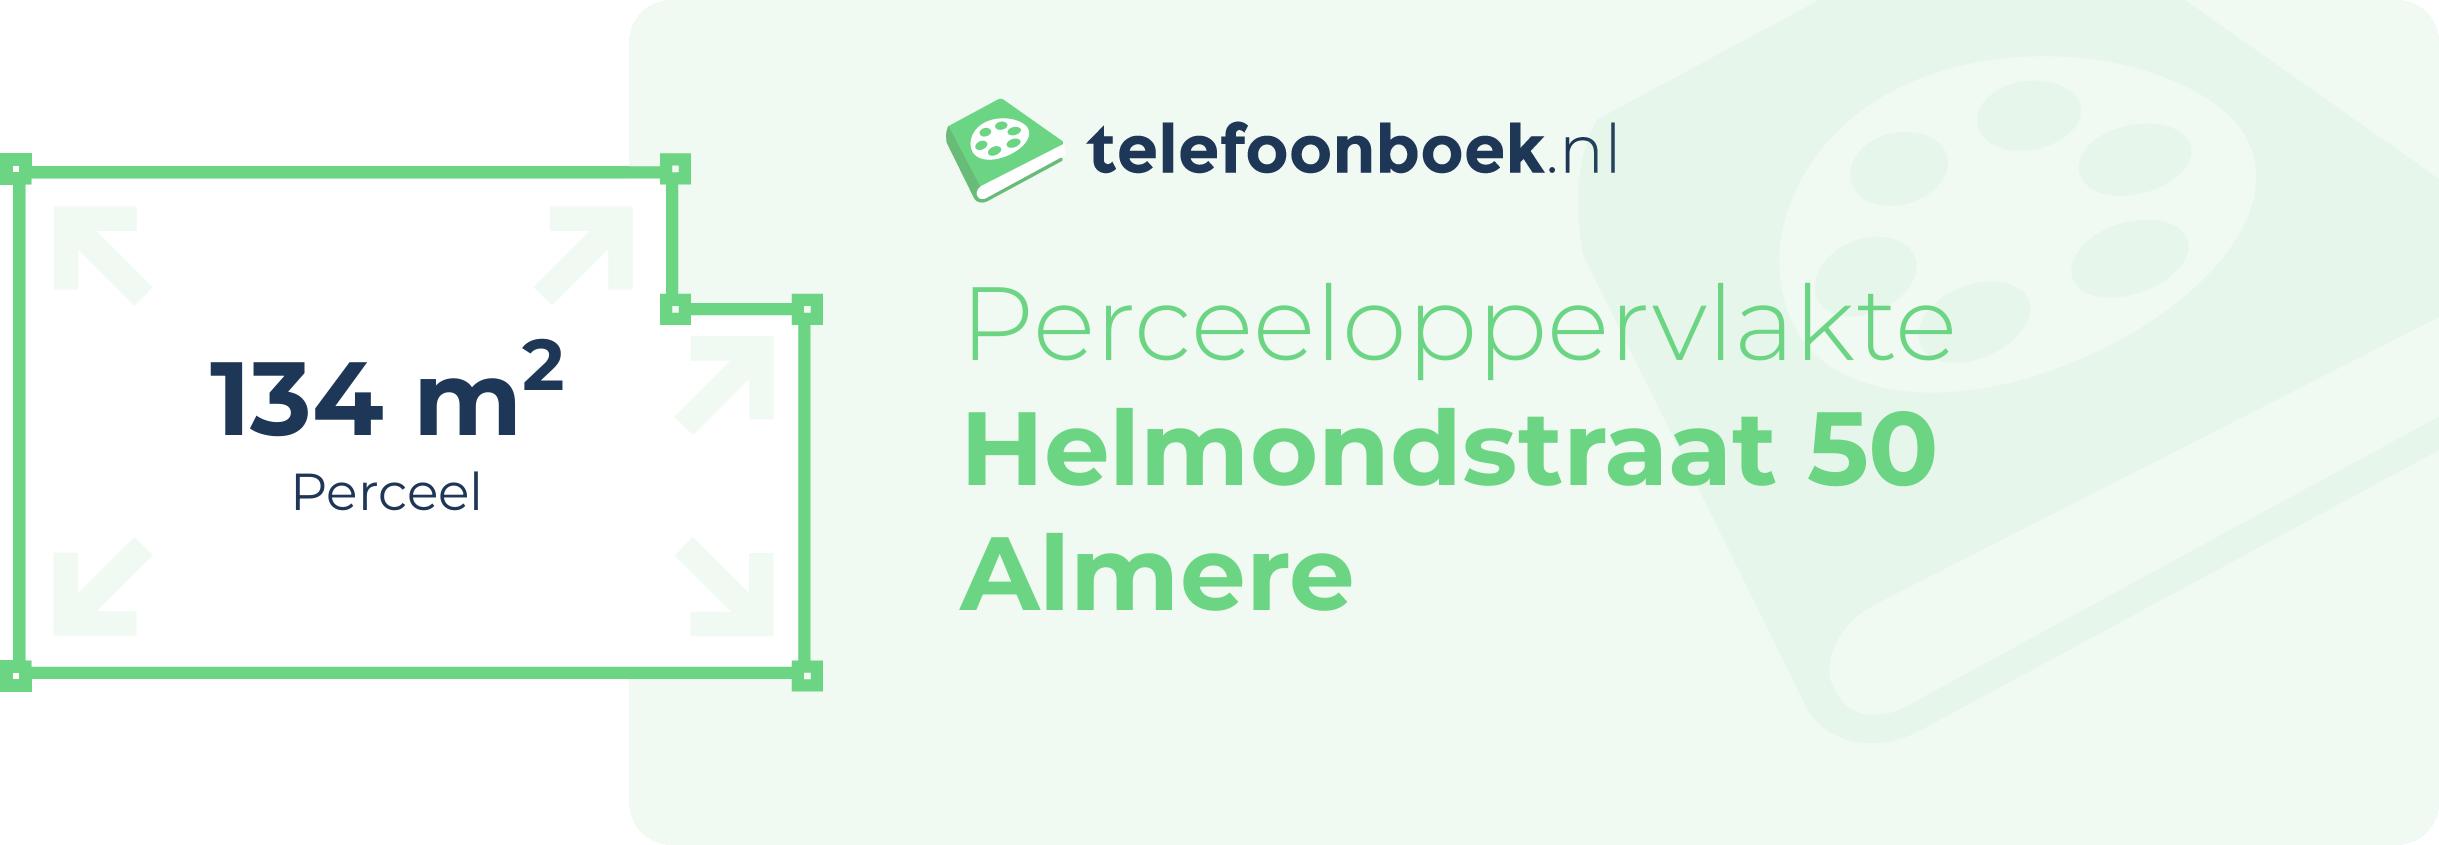 Perceeloppervlakte Helmondstraat 50 Almere